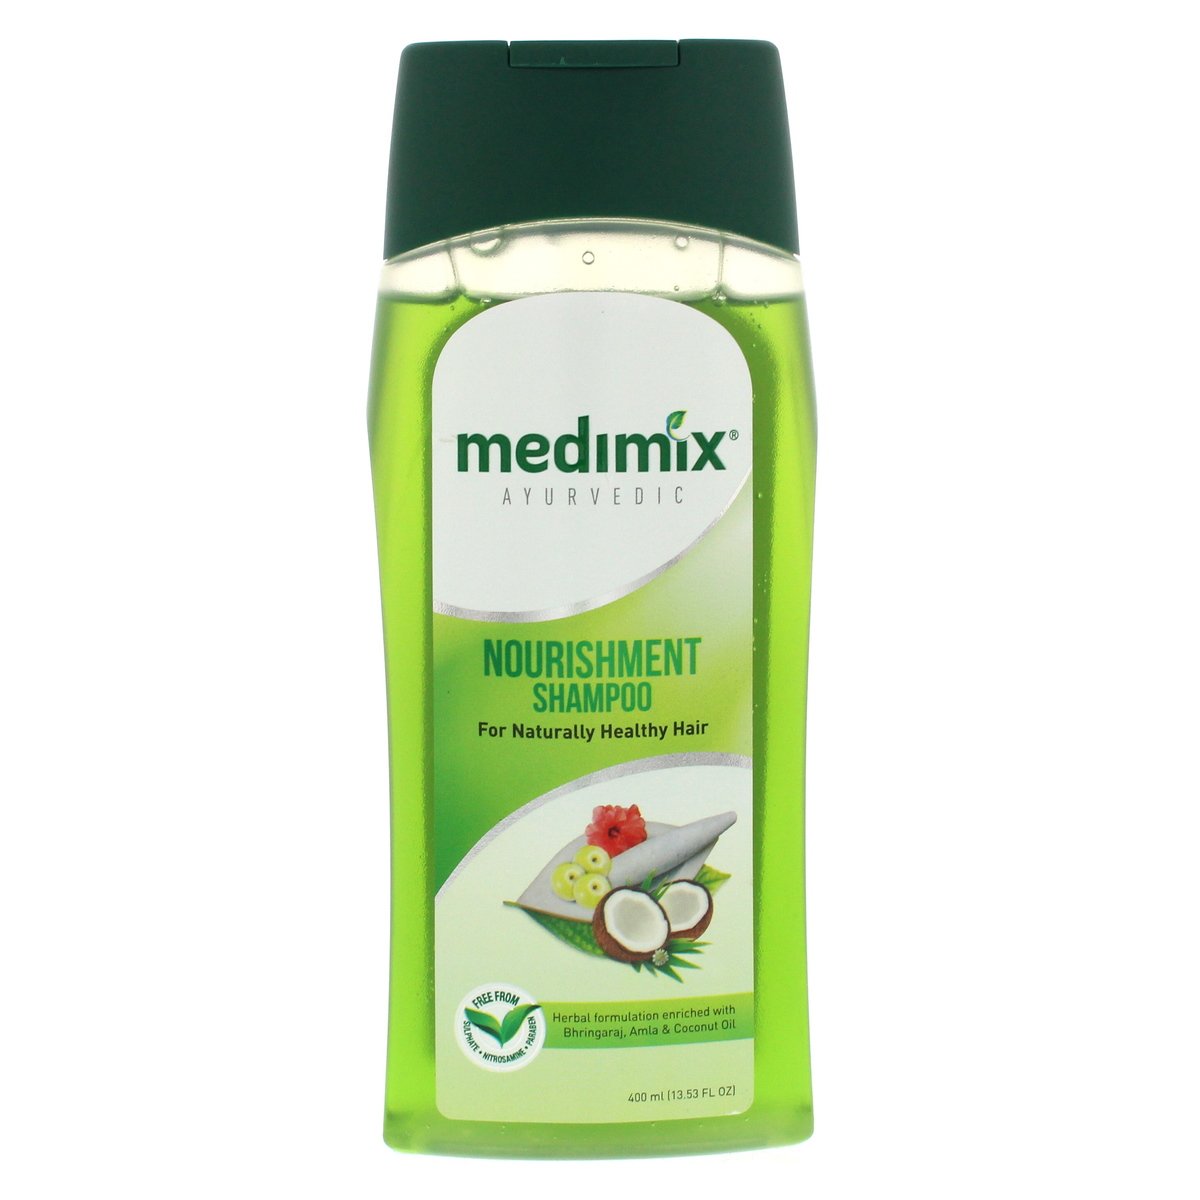 Medimix Ayurvedic Nourishment Shampoo 400 ml